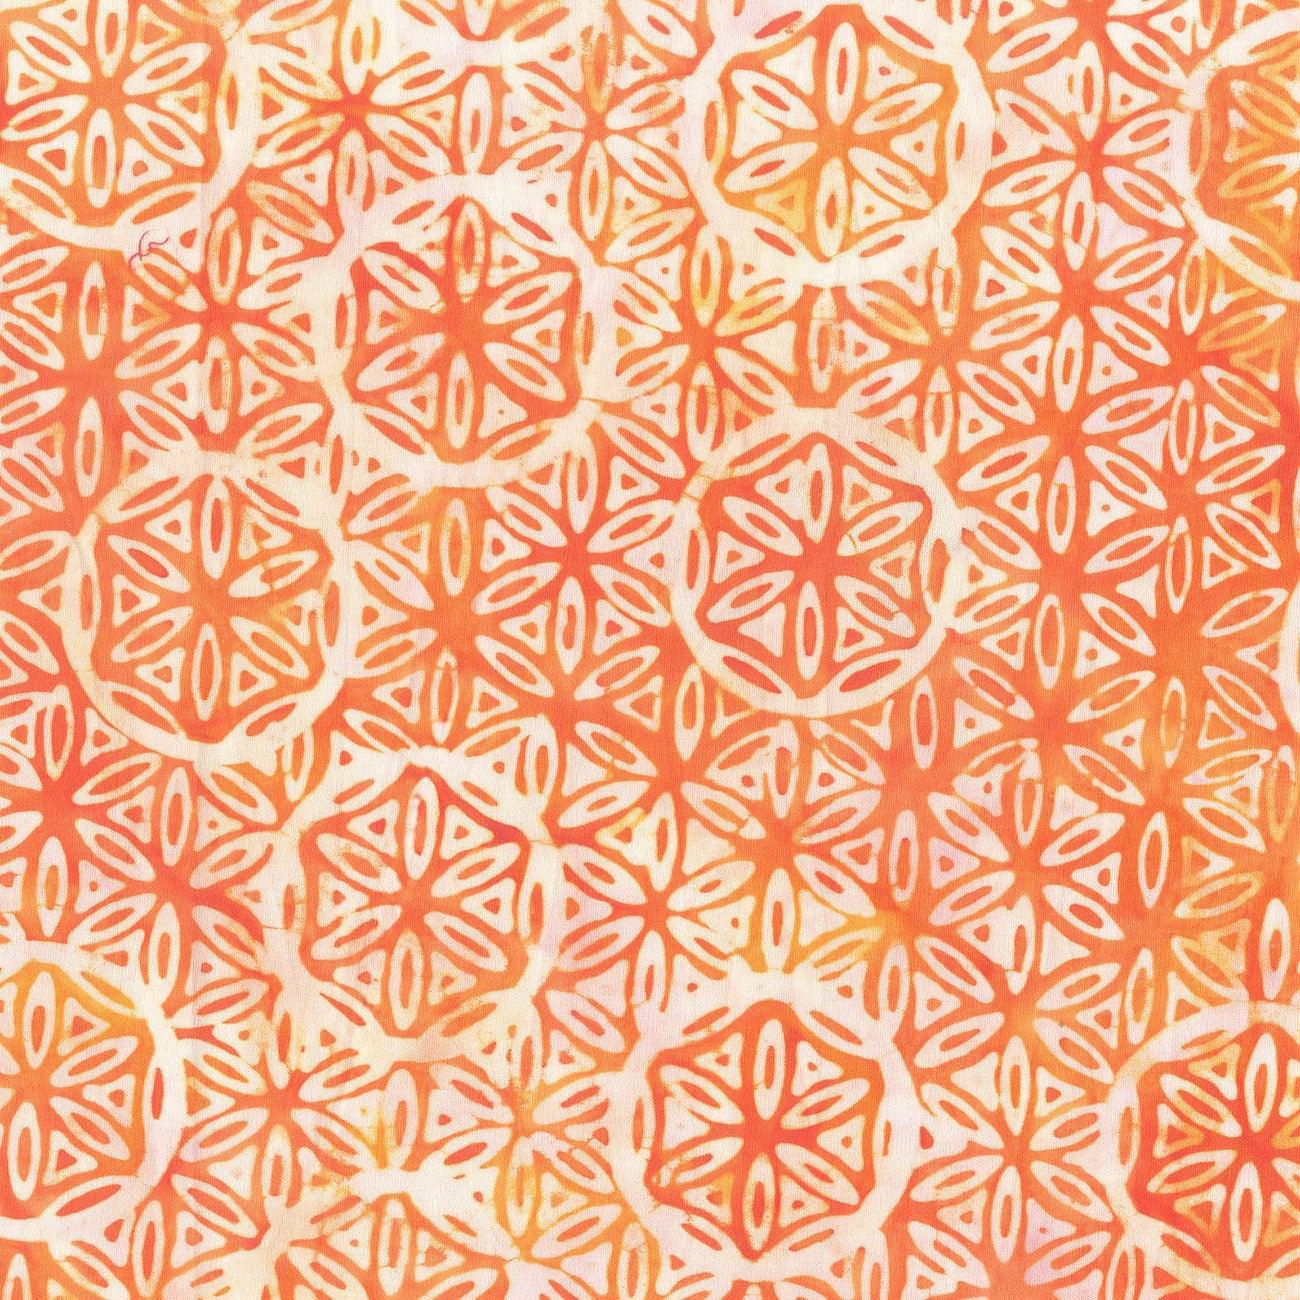 Bijou Orange Medallions Batik Fabric